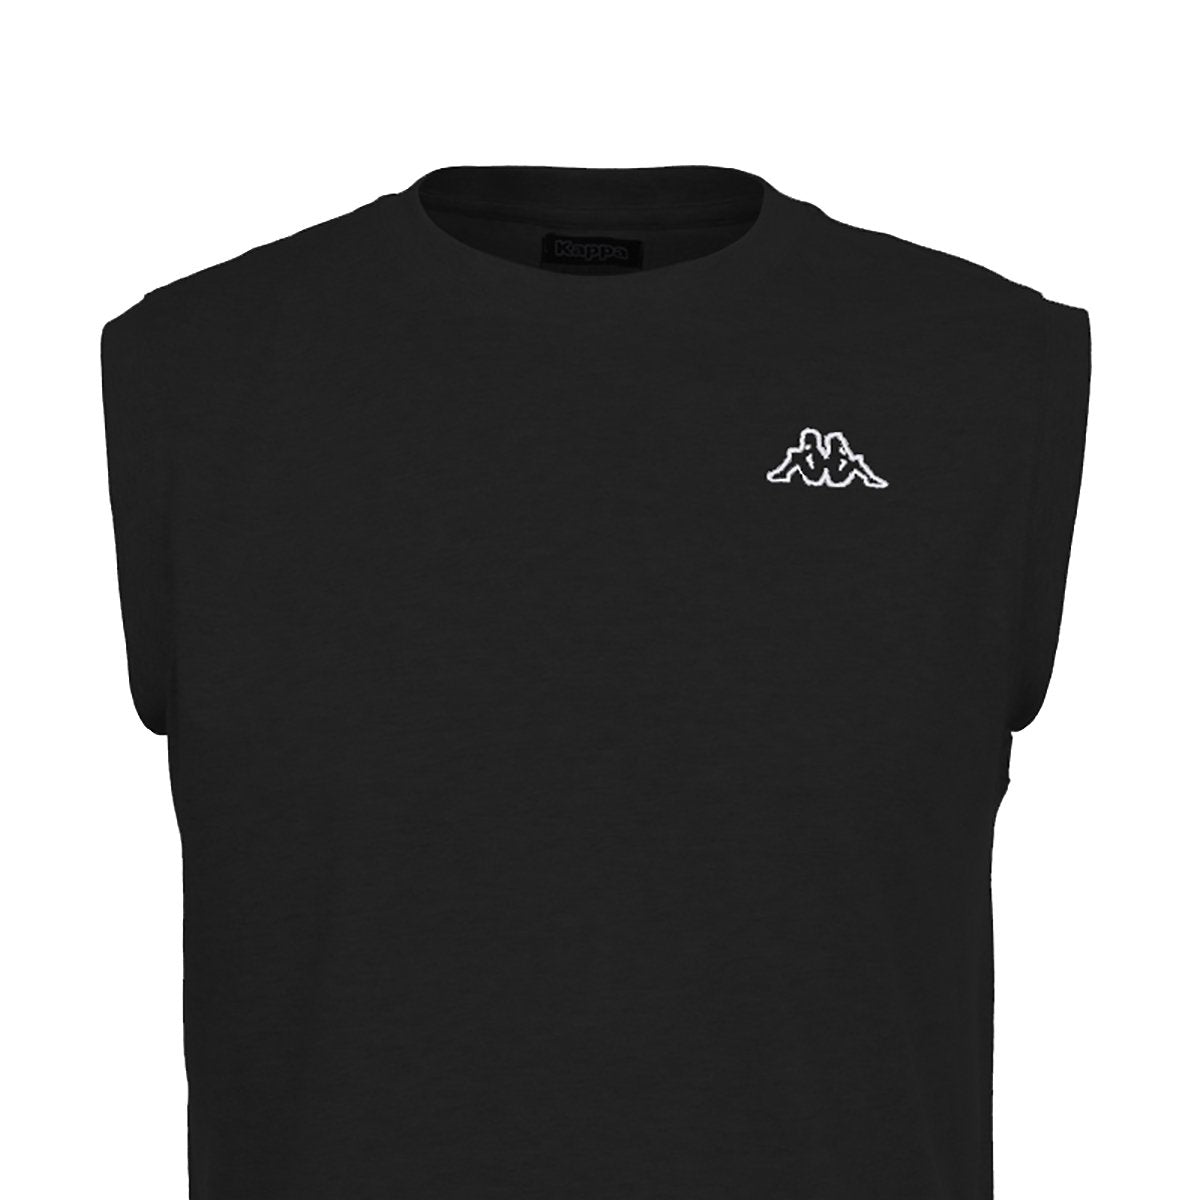 Camiseta Cadwal negro Niños - Imagen 2